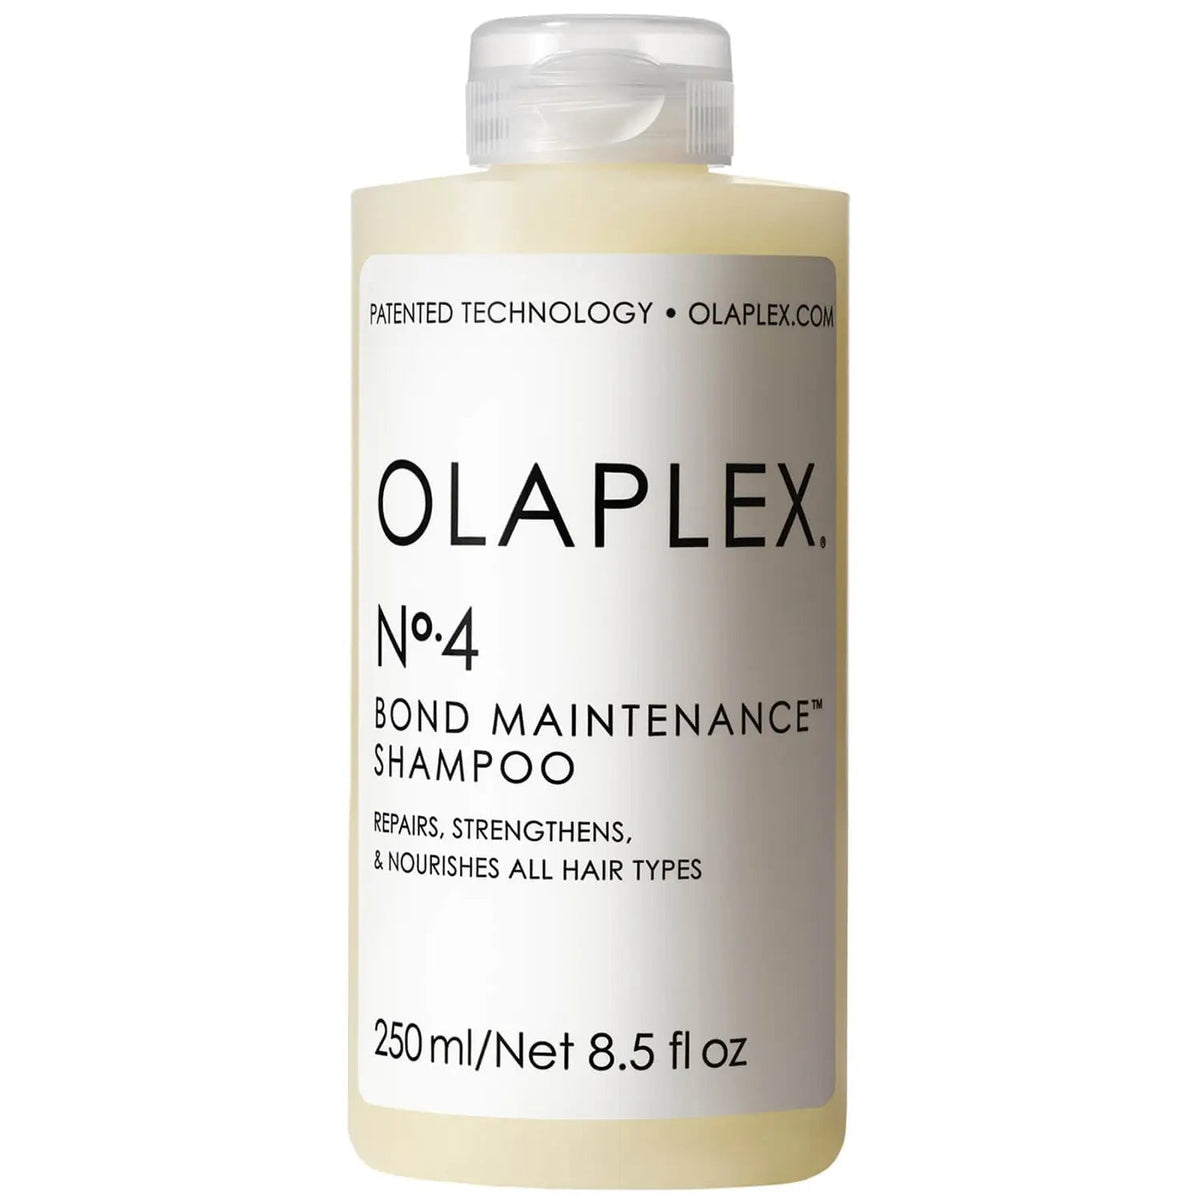  OLAPLEX Olaplex No.4 Bond Maintenance Shampoo 250ml